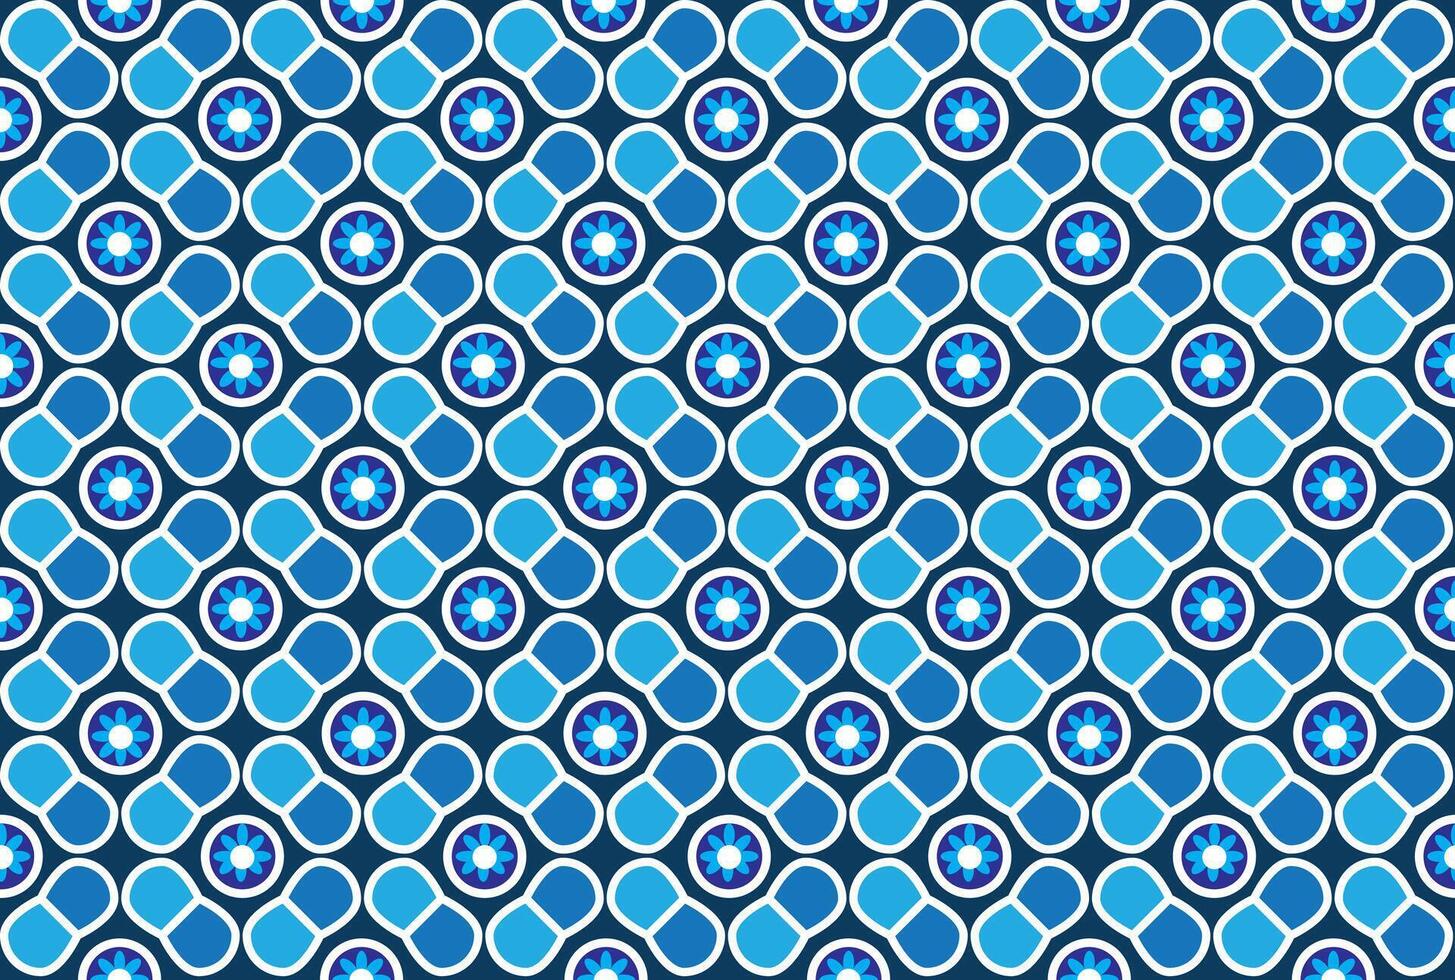 illustration, mönster av blomma i blå cirkel på djup blå bakgrund. vektor